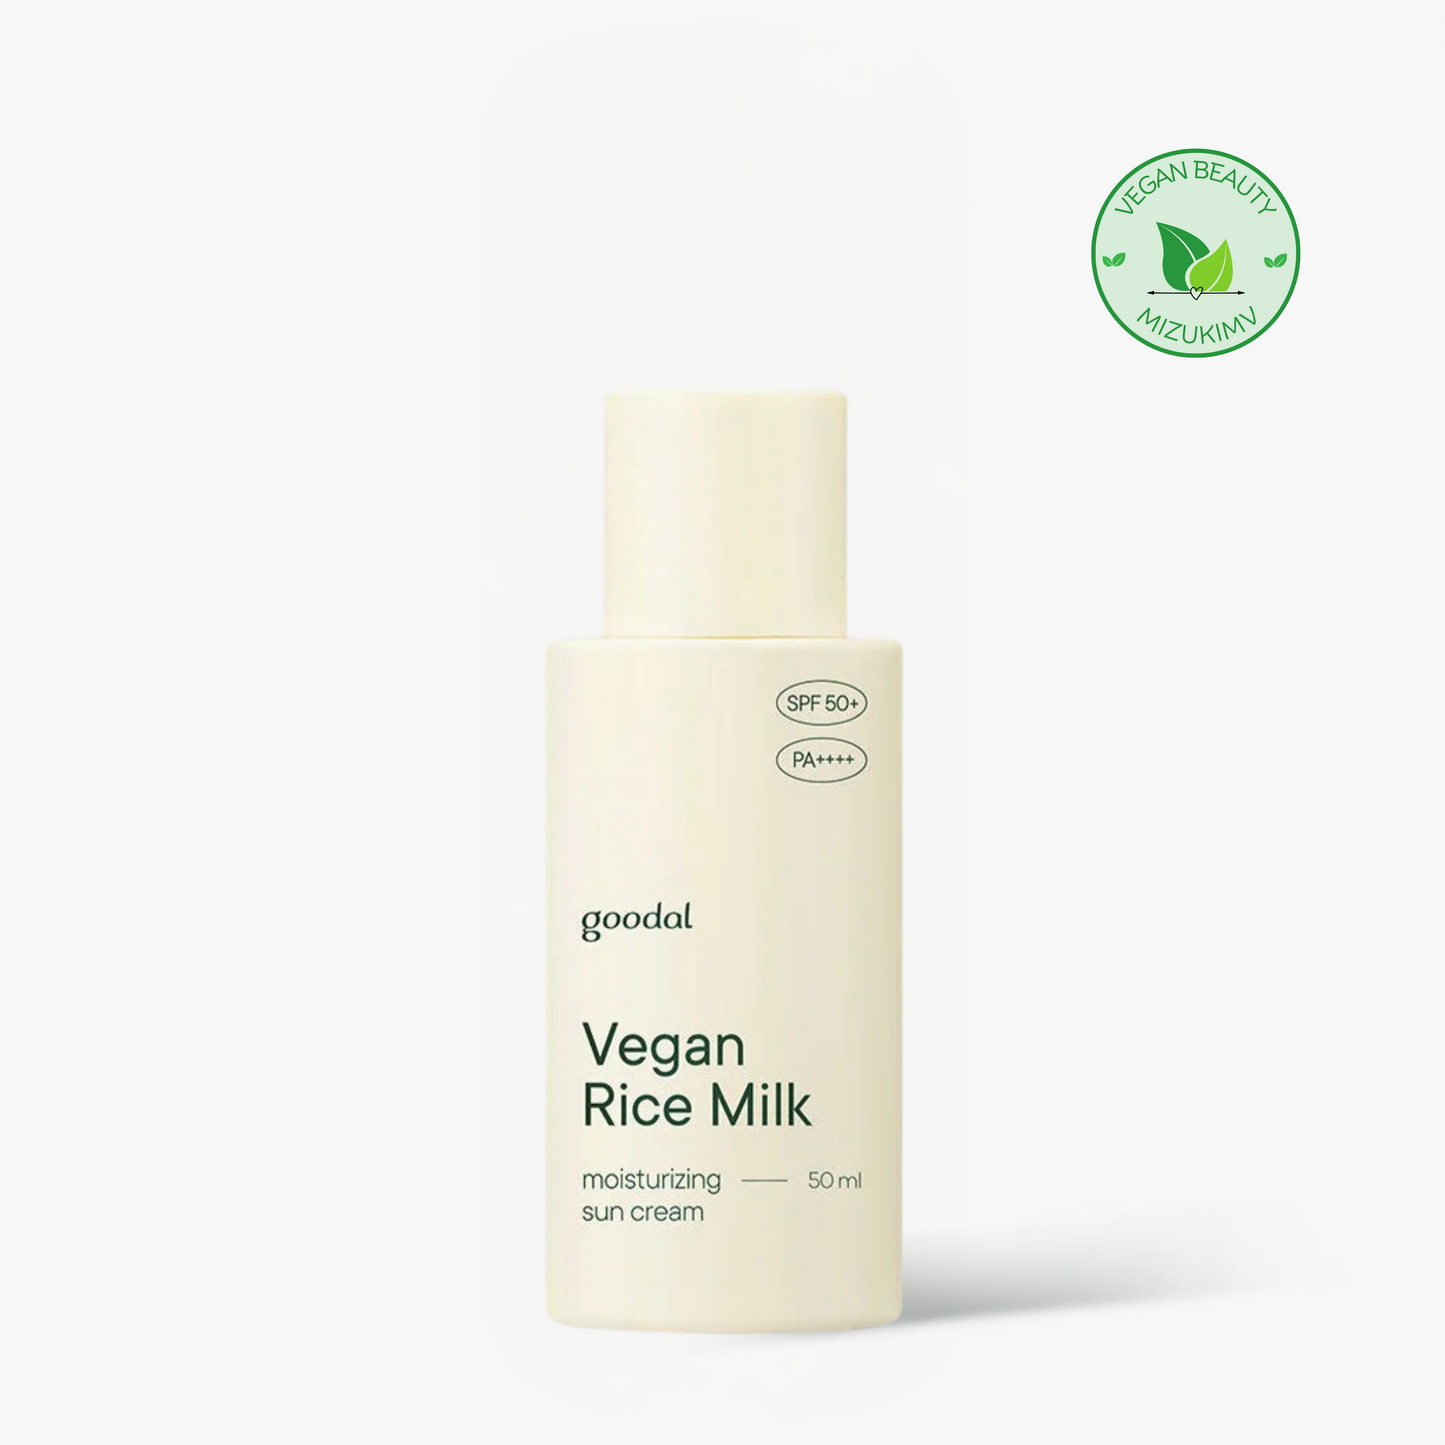 GOODAL Vegan rice milk moisturizing sun cream SPF50+ PA++++